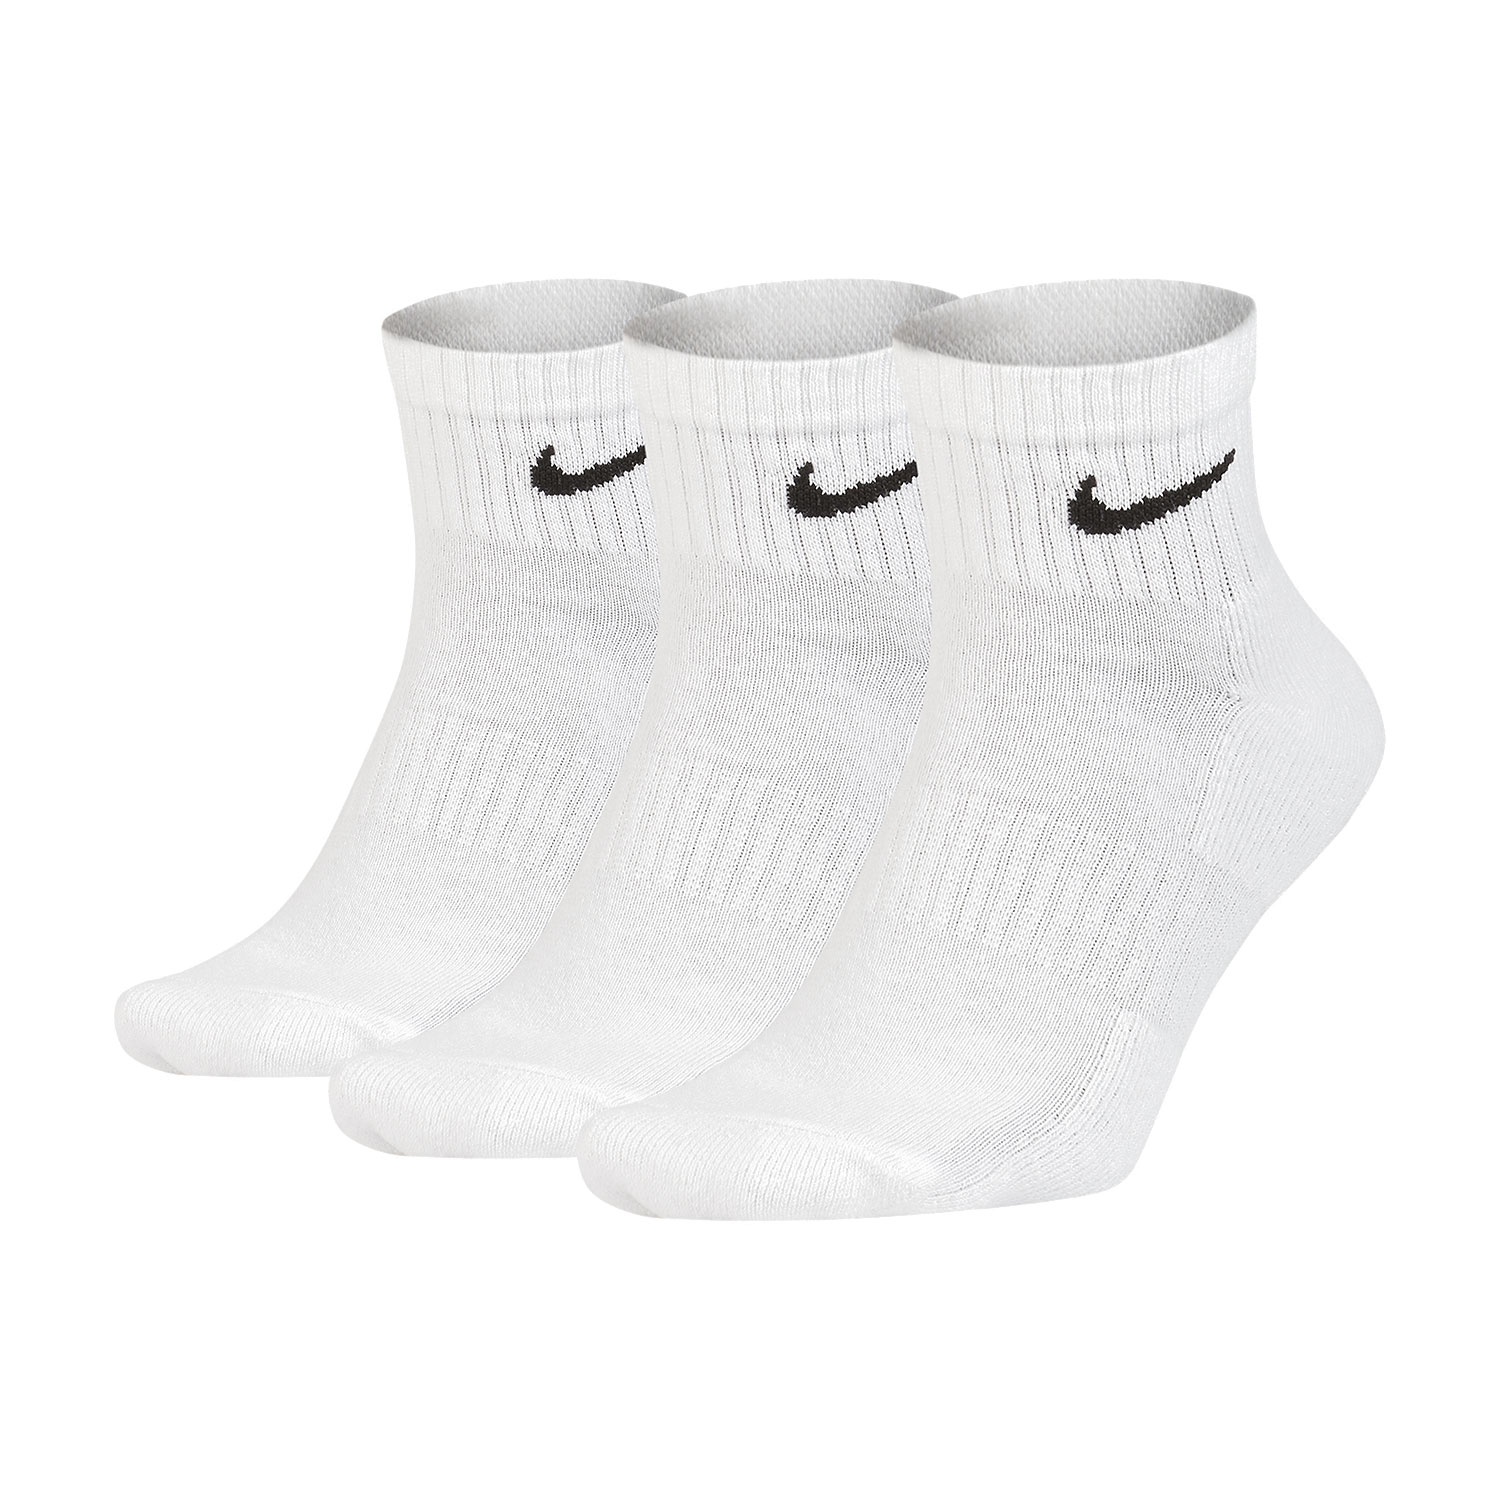 Nike Everyday Cushion x 3 Calcetines de Running White/Black